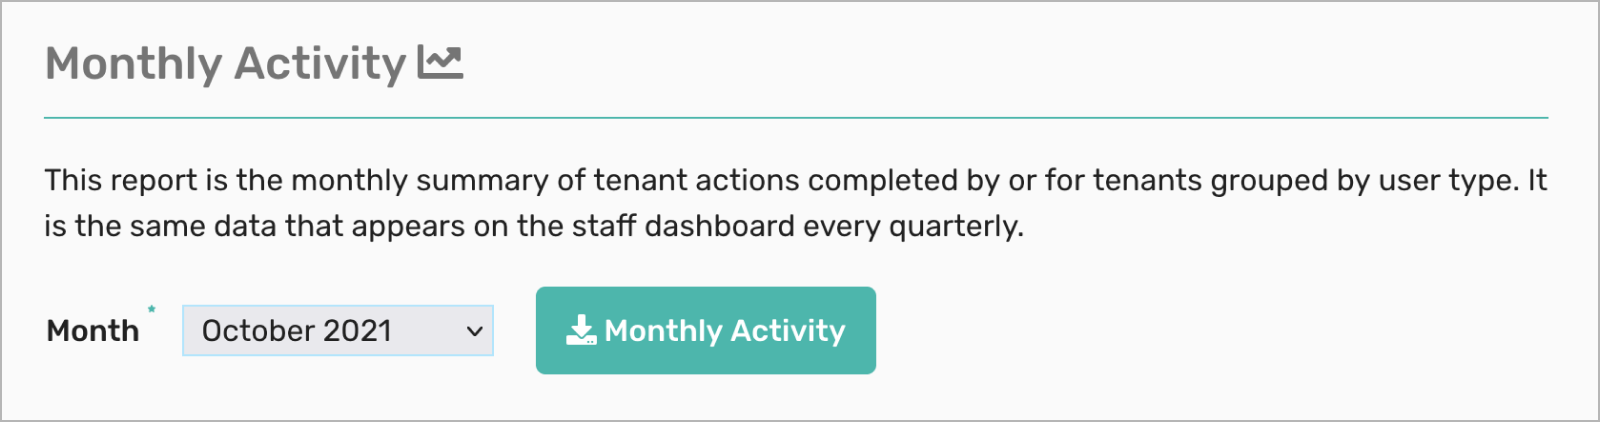 Monthly activity report